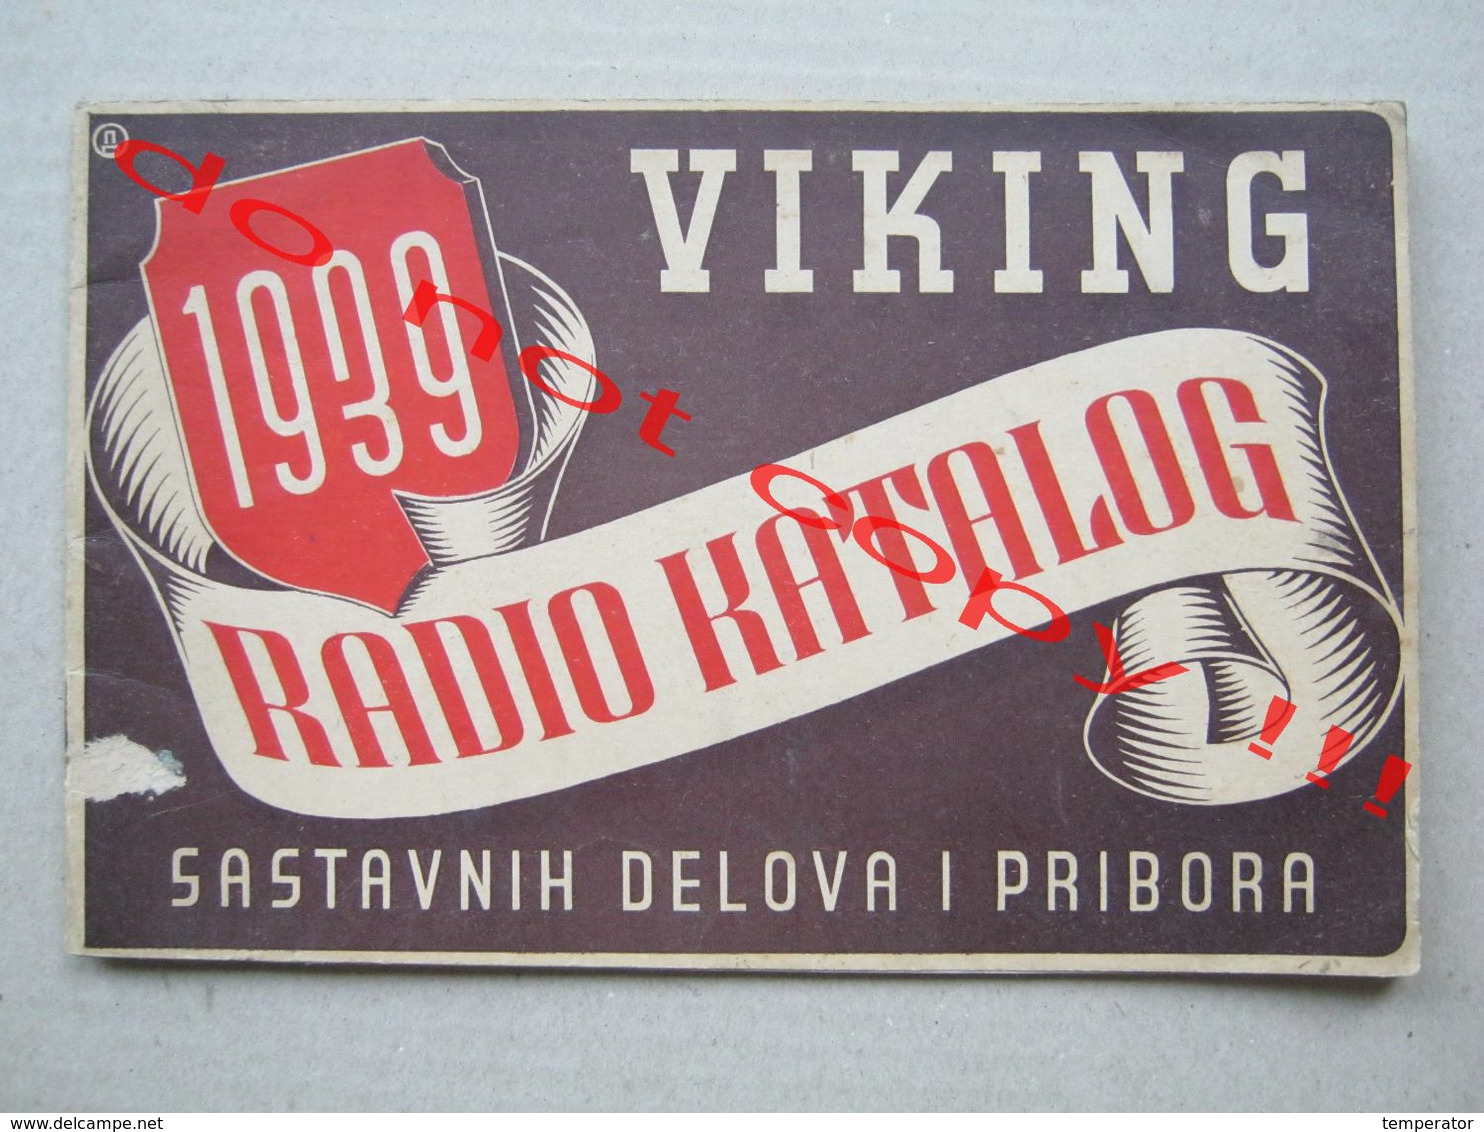 " VIKING " ( 1939 ) / RADIO KATALOG SASTAVNIH DELOVA I PRIBORA With Price List - Kingdom Of Yugoslavia - Literatur & Schaltpläne